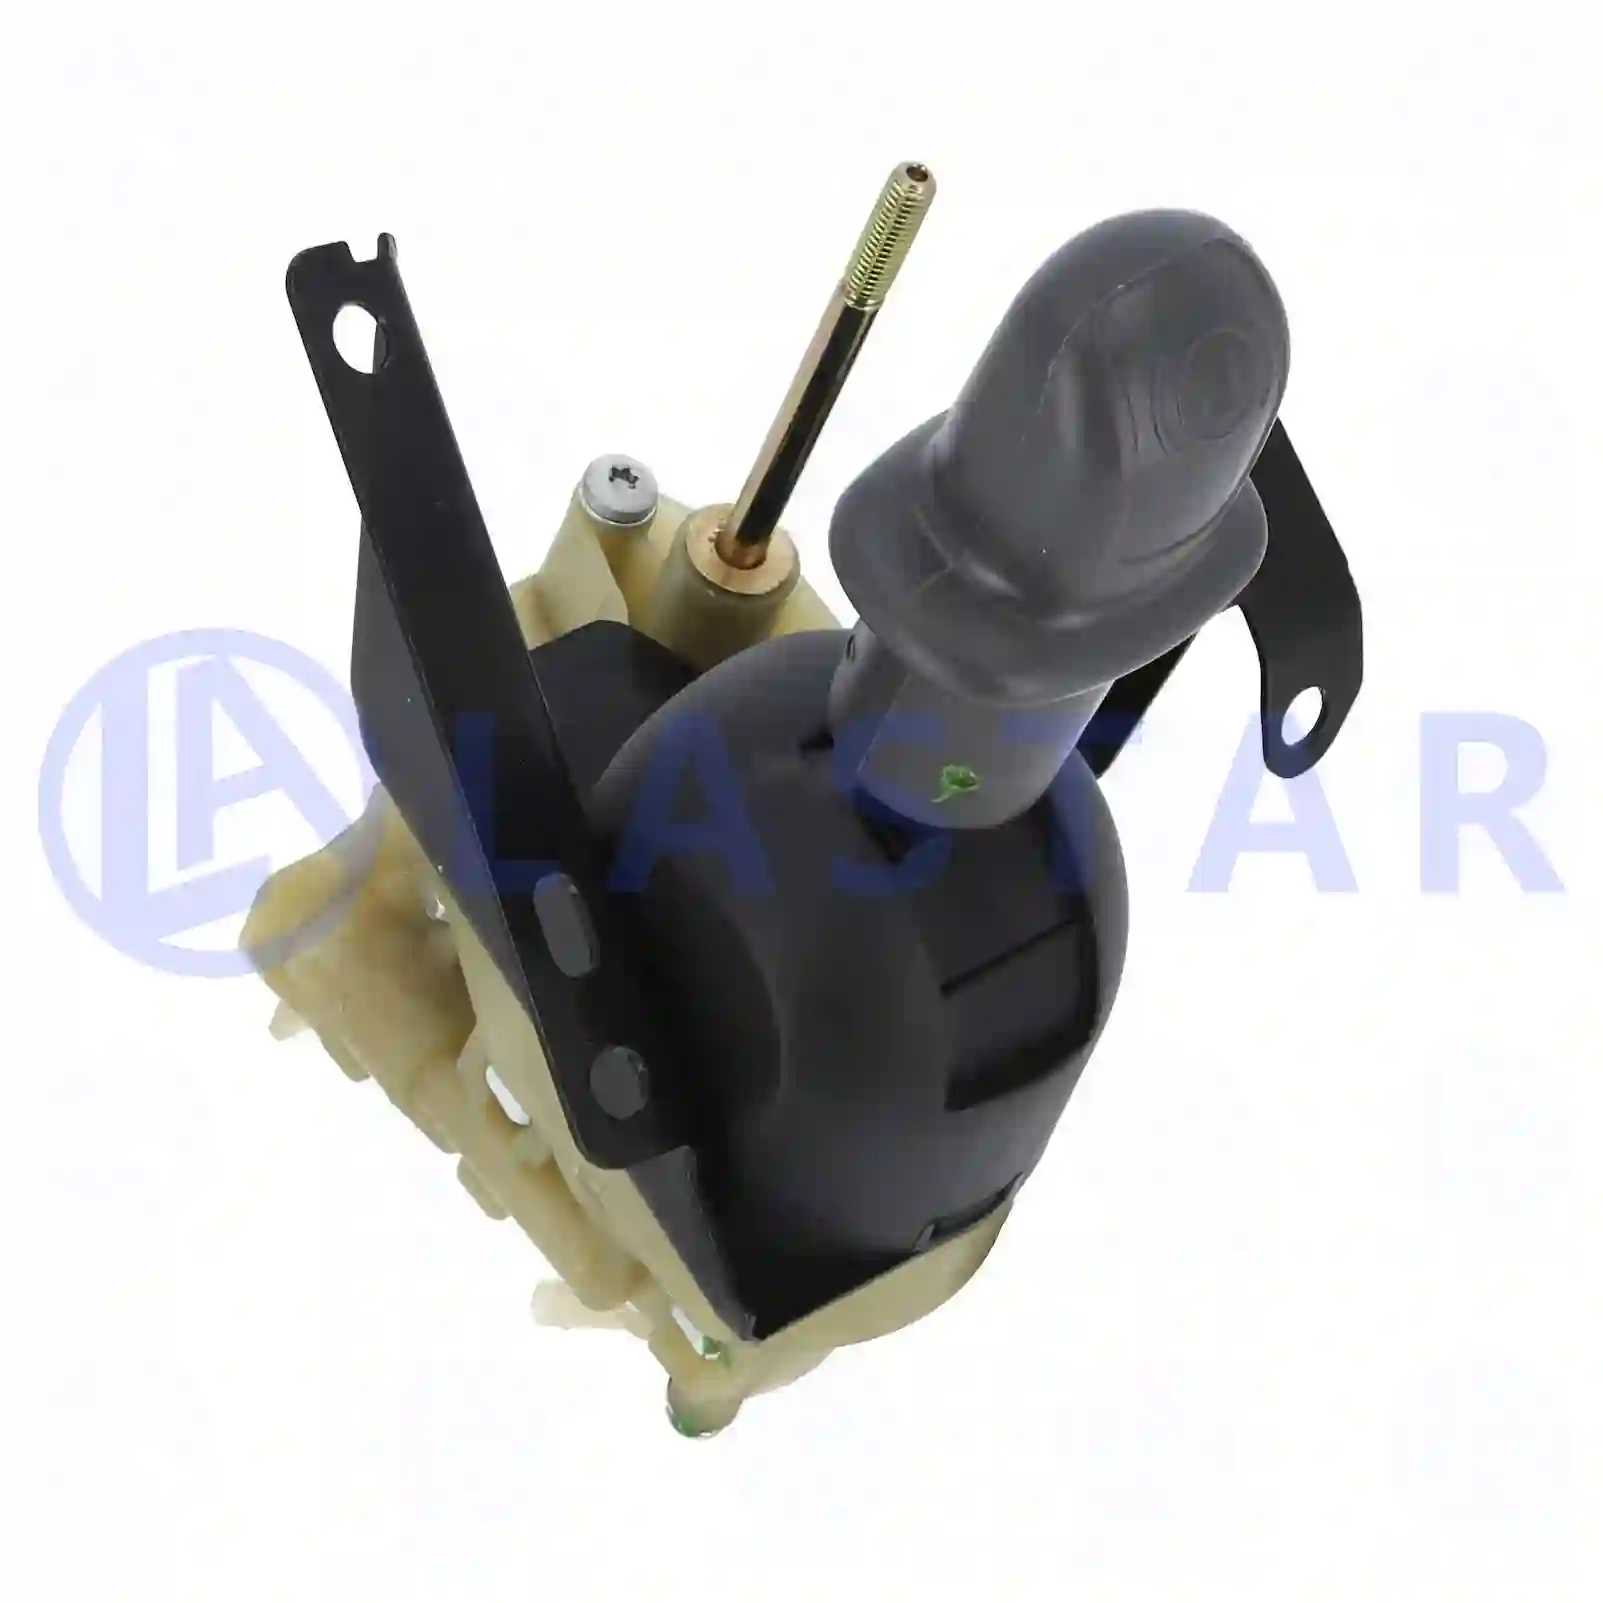  Hand brake valve || Lastar Spare Part | Truck Spare Parts, Auotomotive Spare Parts